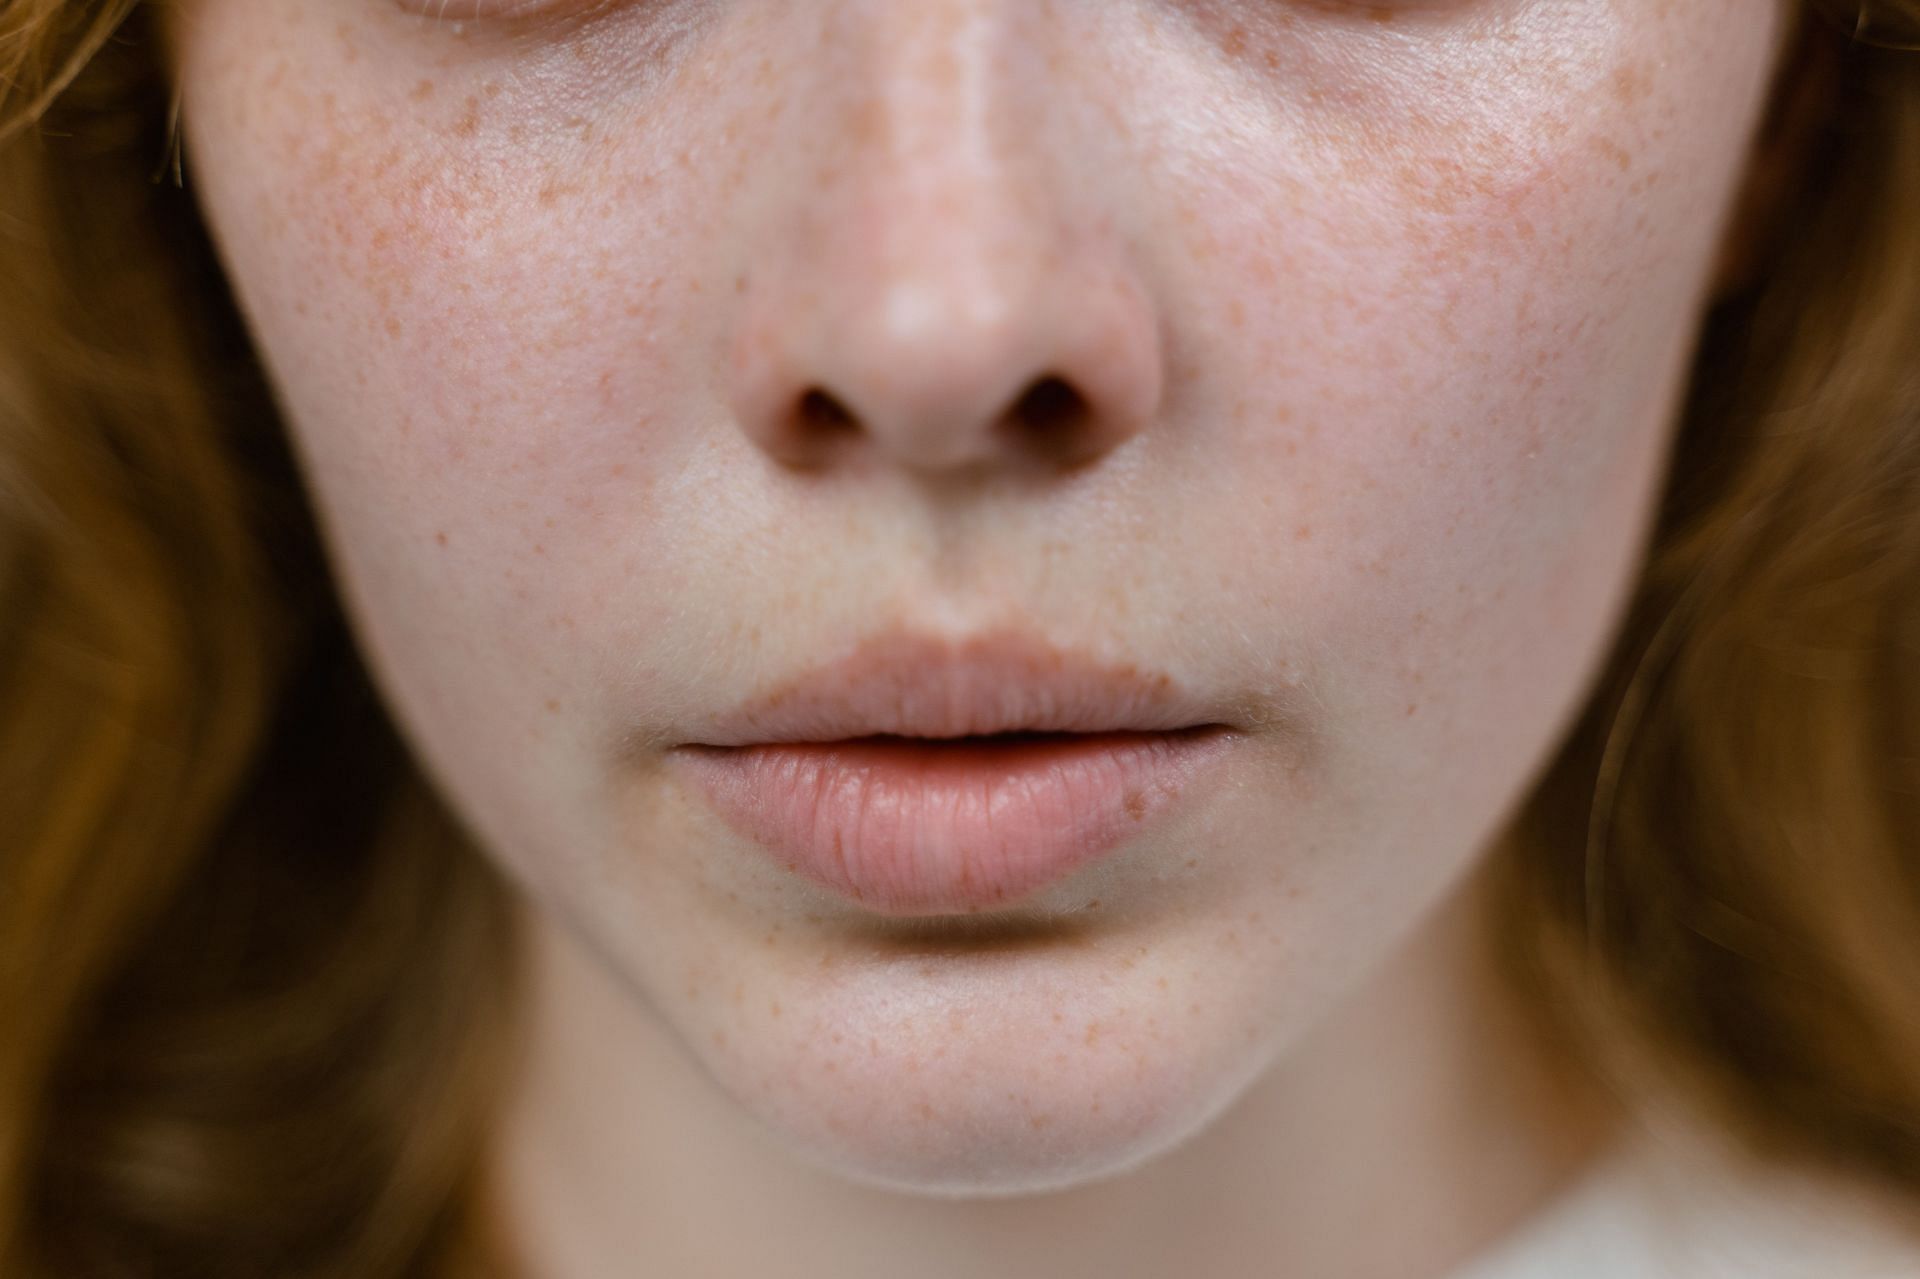 Clear pores help in getting rid of dirt, oil and sebum. (Image via Pexels/Tima Miroshnichenko)